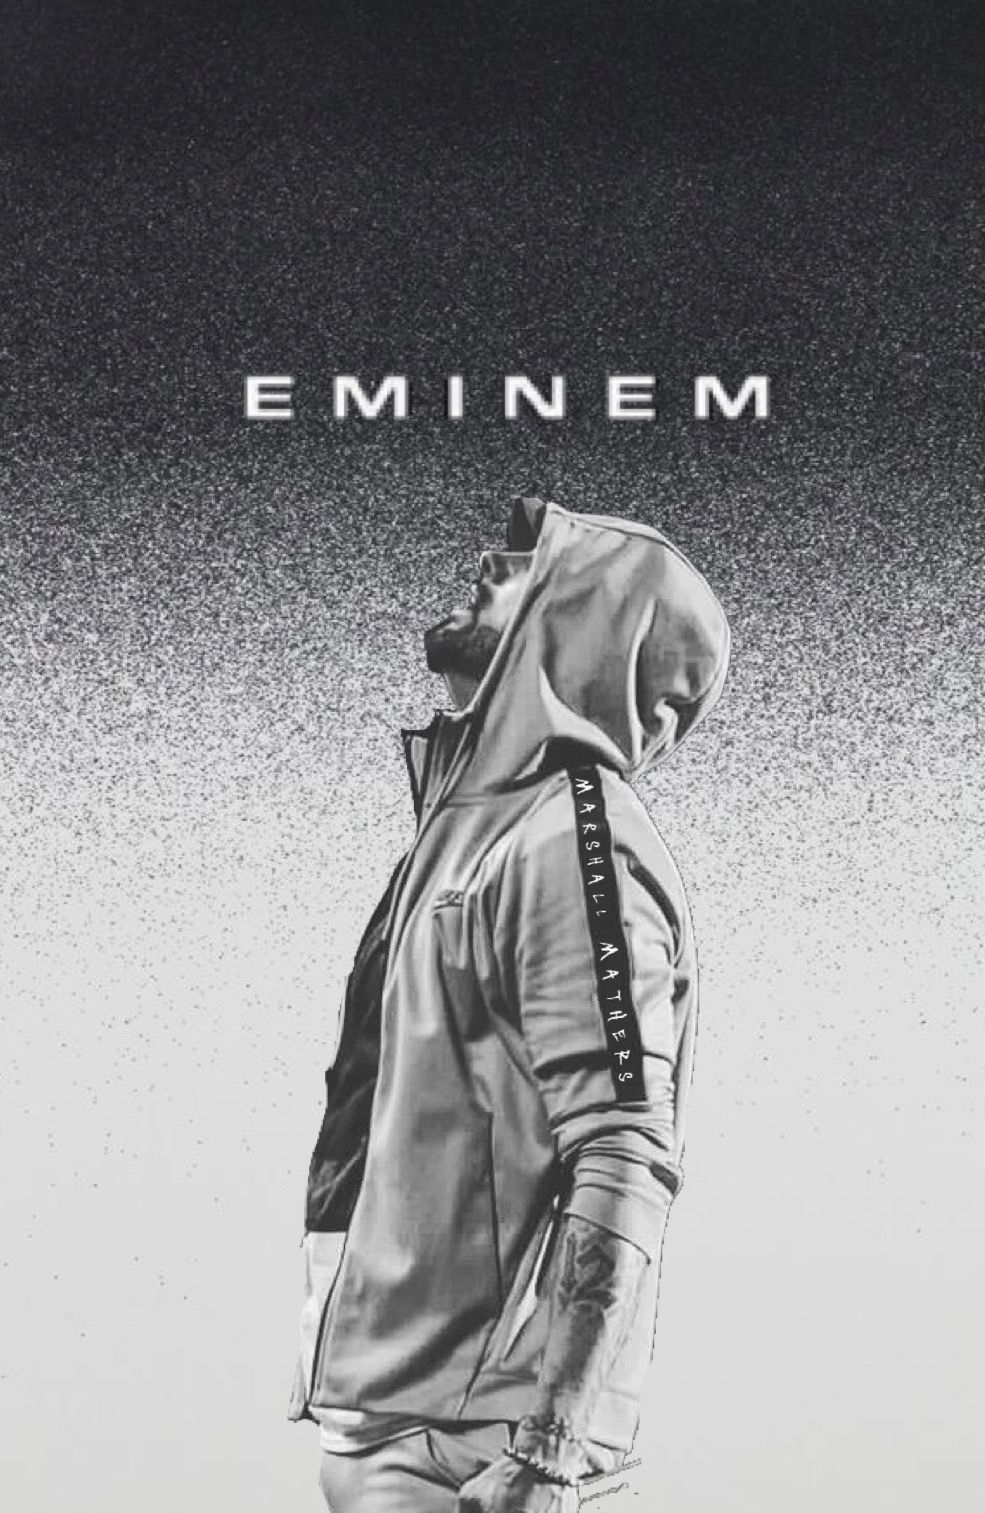 Background Eminem Wallpaper